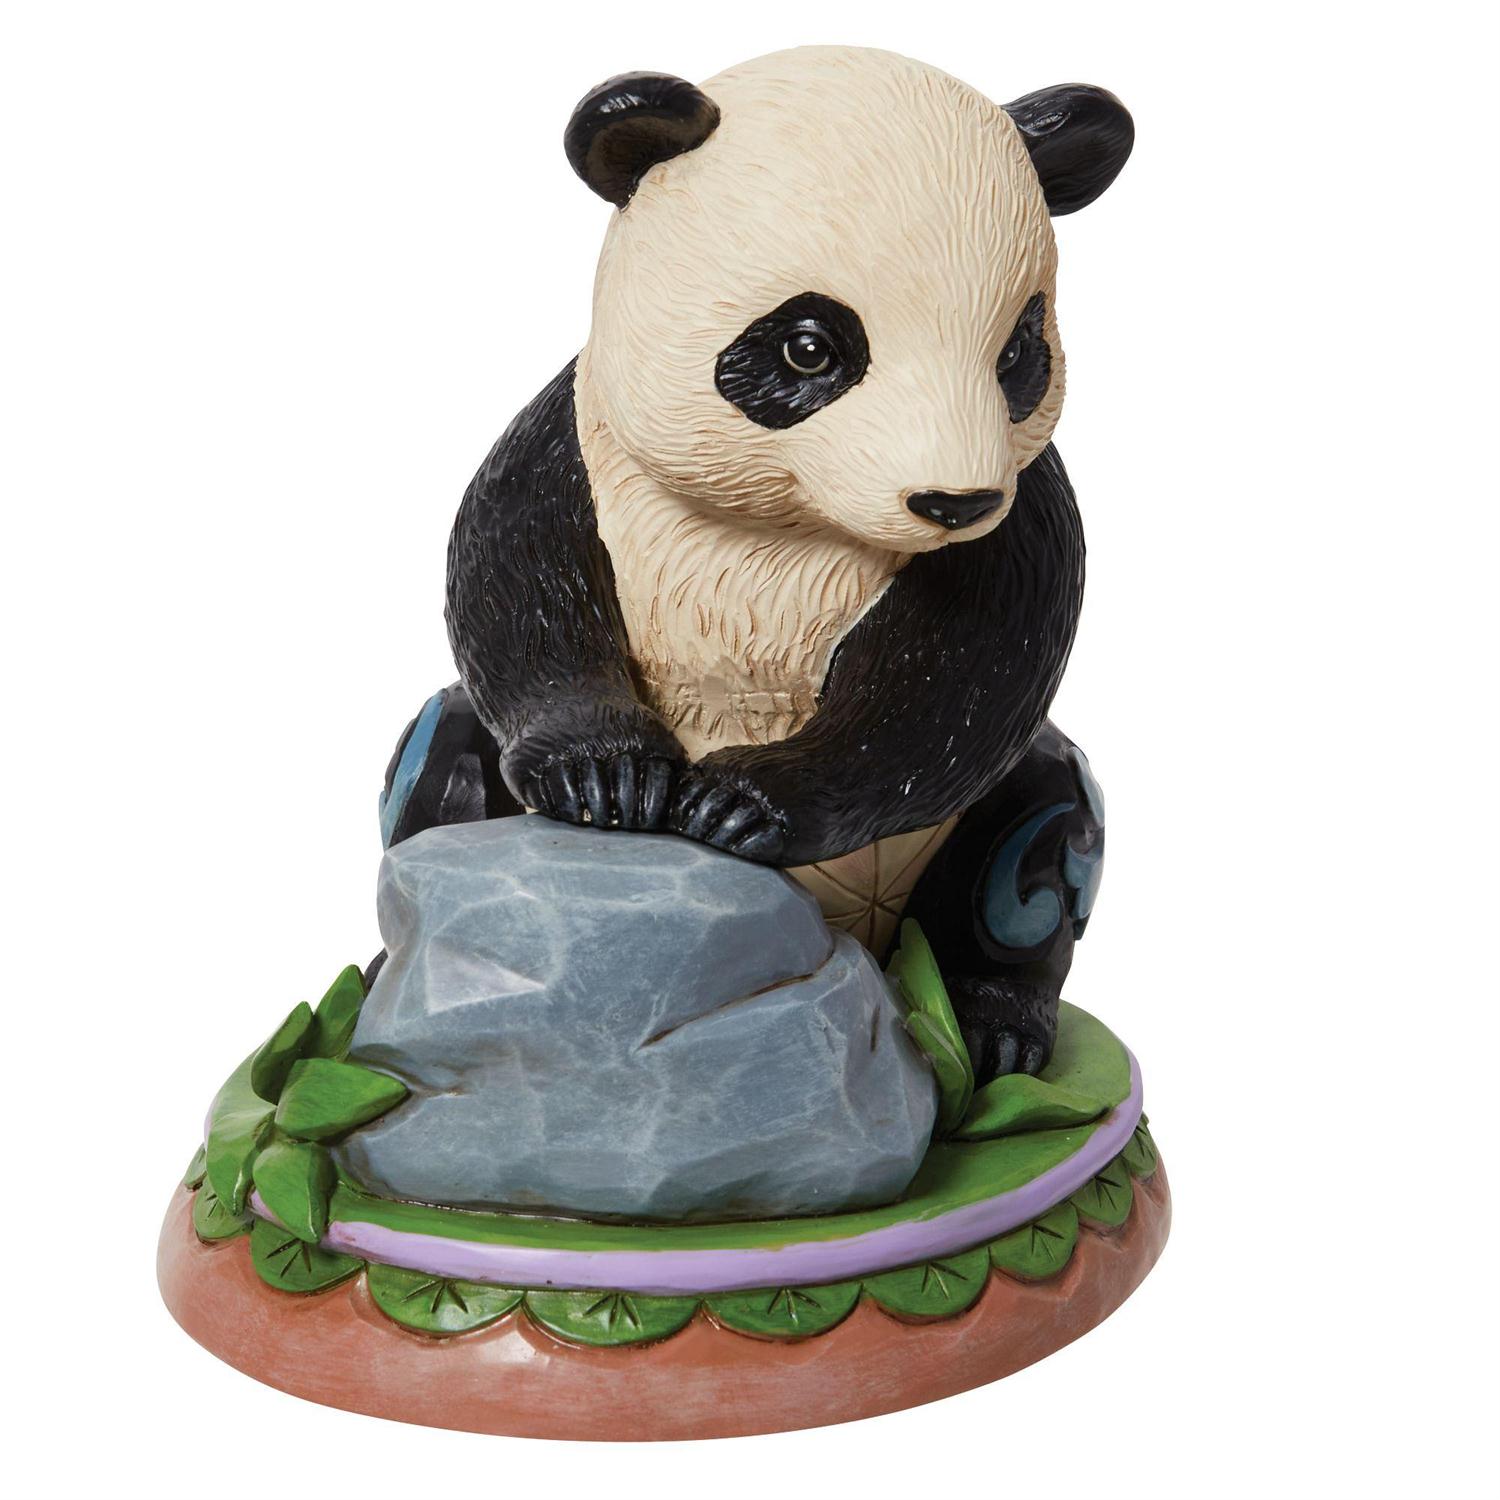 Jim Shore Animal Planet Giant Panda Cub Figurine